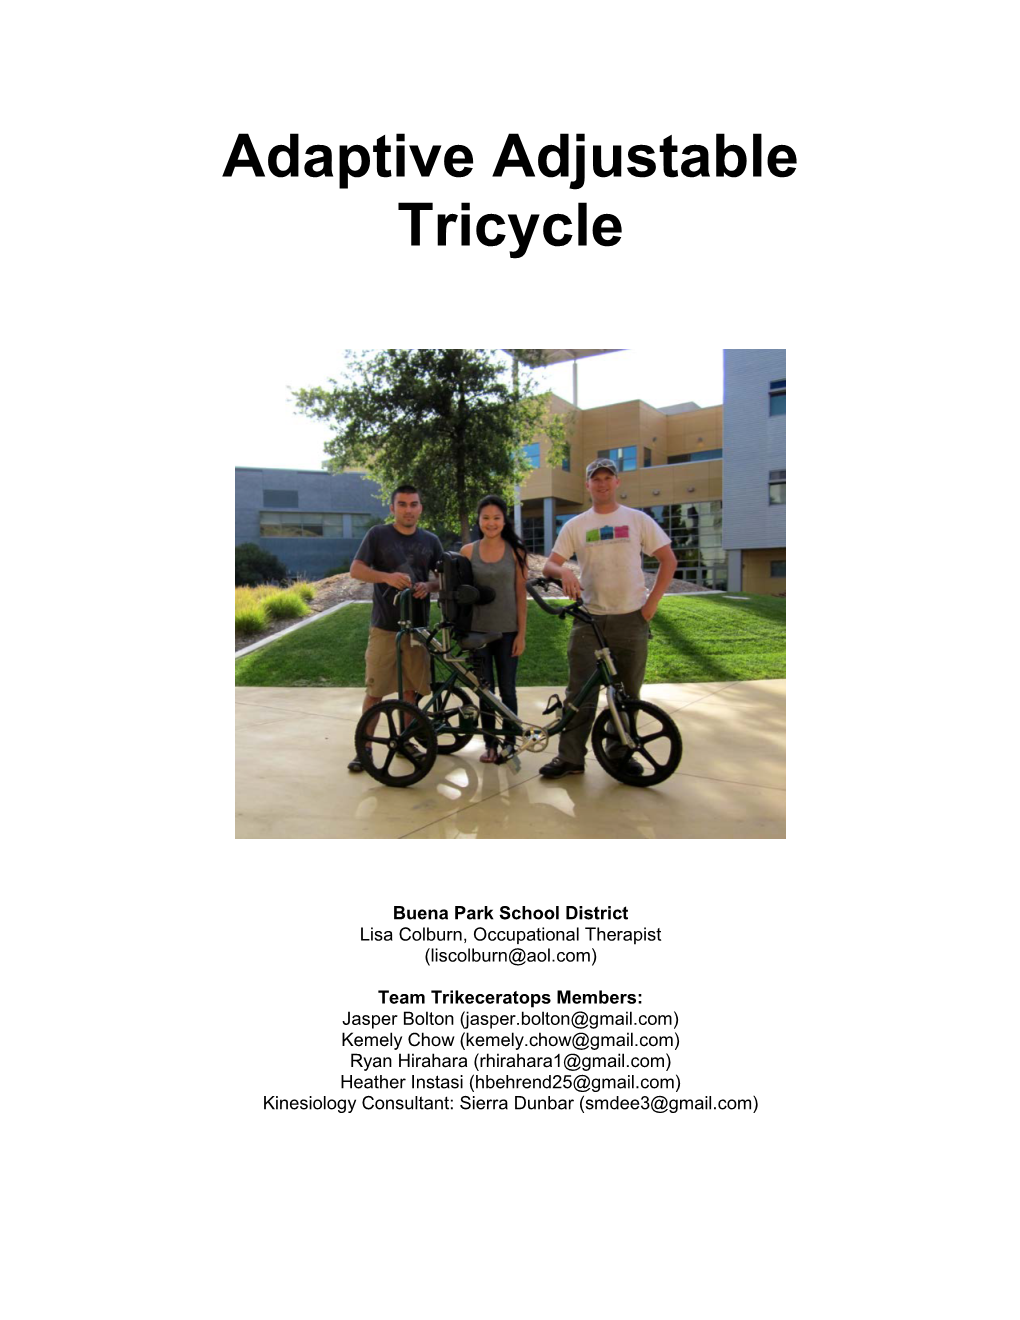 Adaptive Adjustable Tricycle